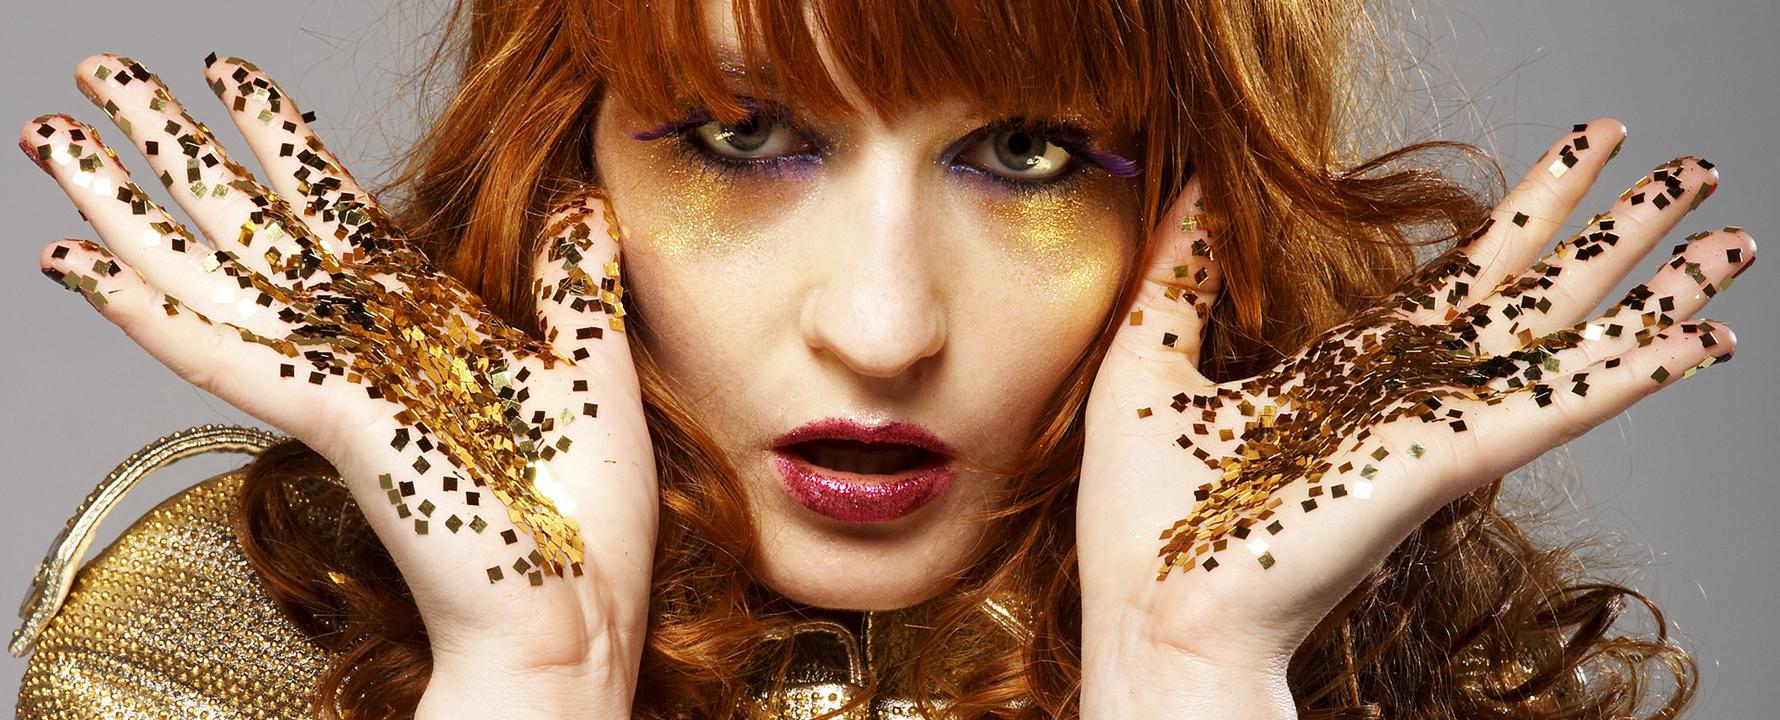 Fotografia promocional de Florence + The Machine.